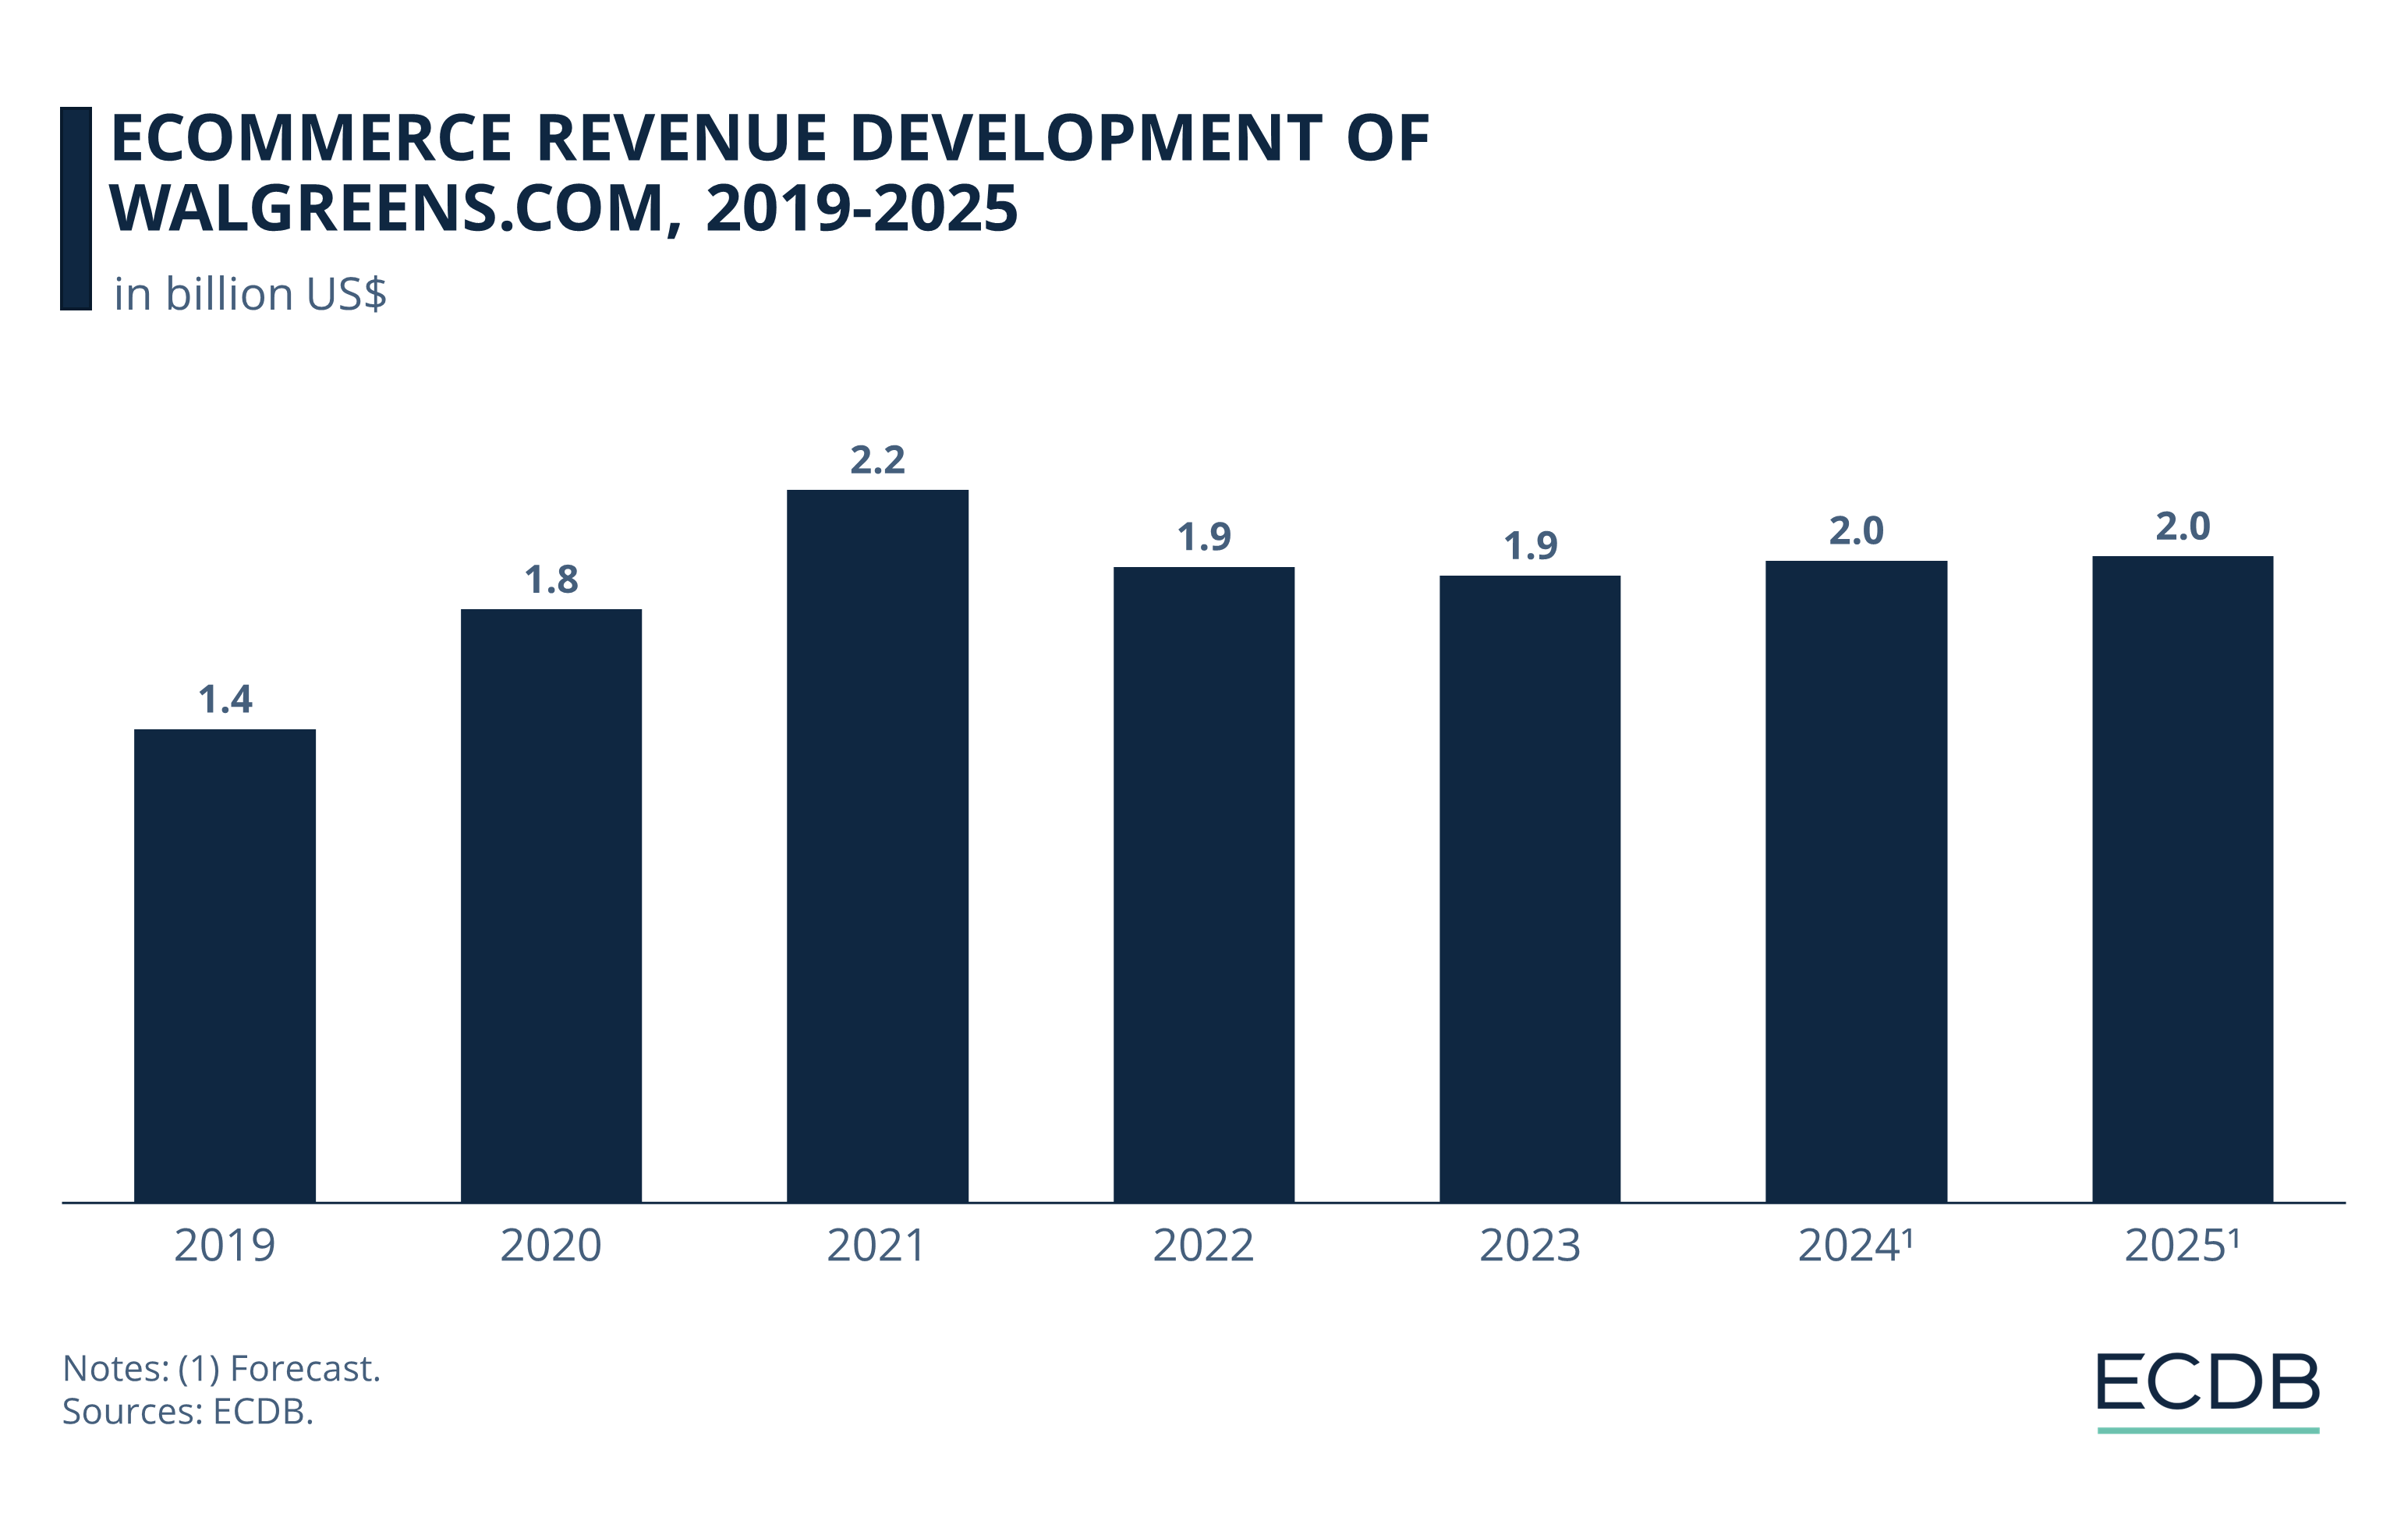 eCommerce Revenue Development of Walgreens.com, 2019-2025